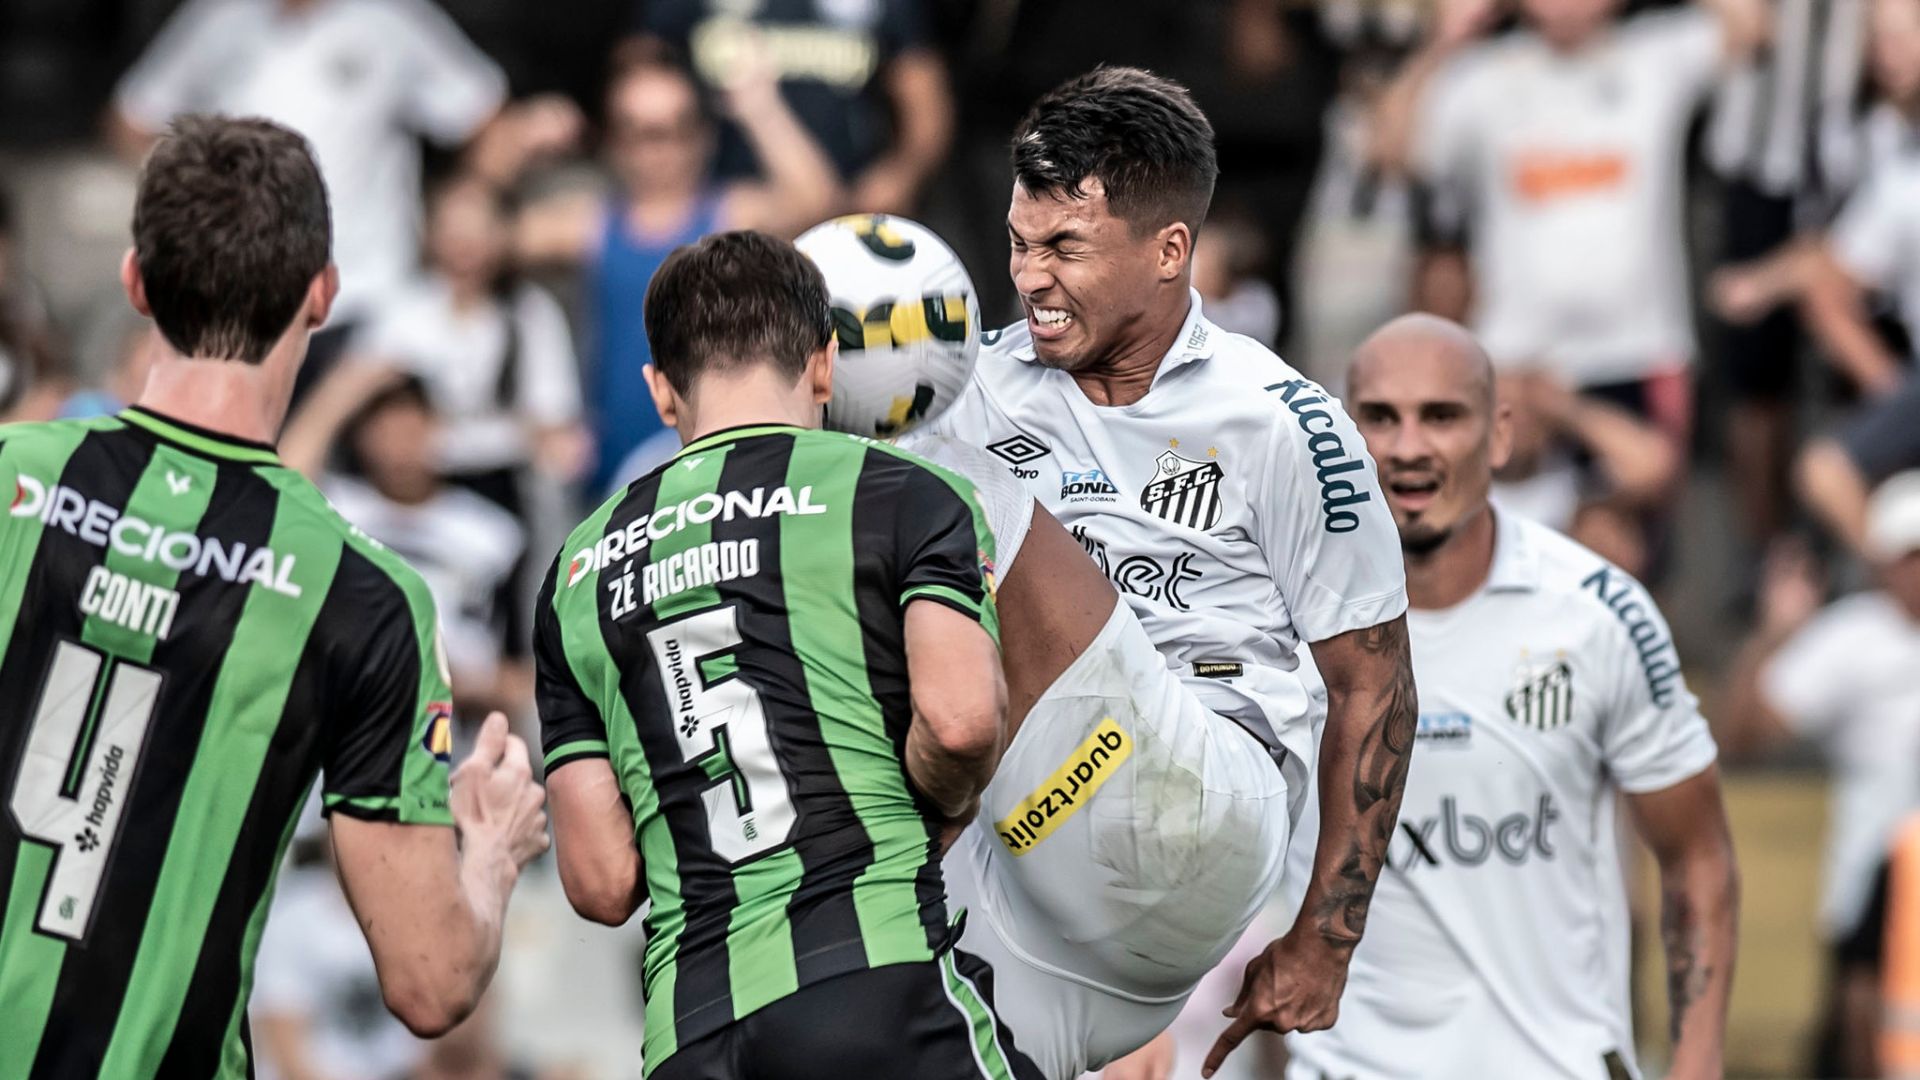 Santos vs América-MG in action